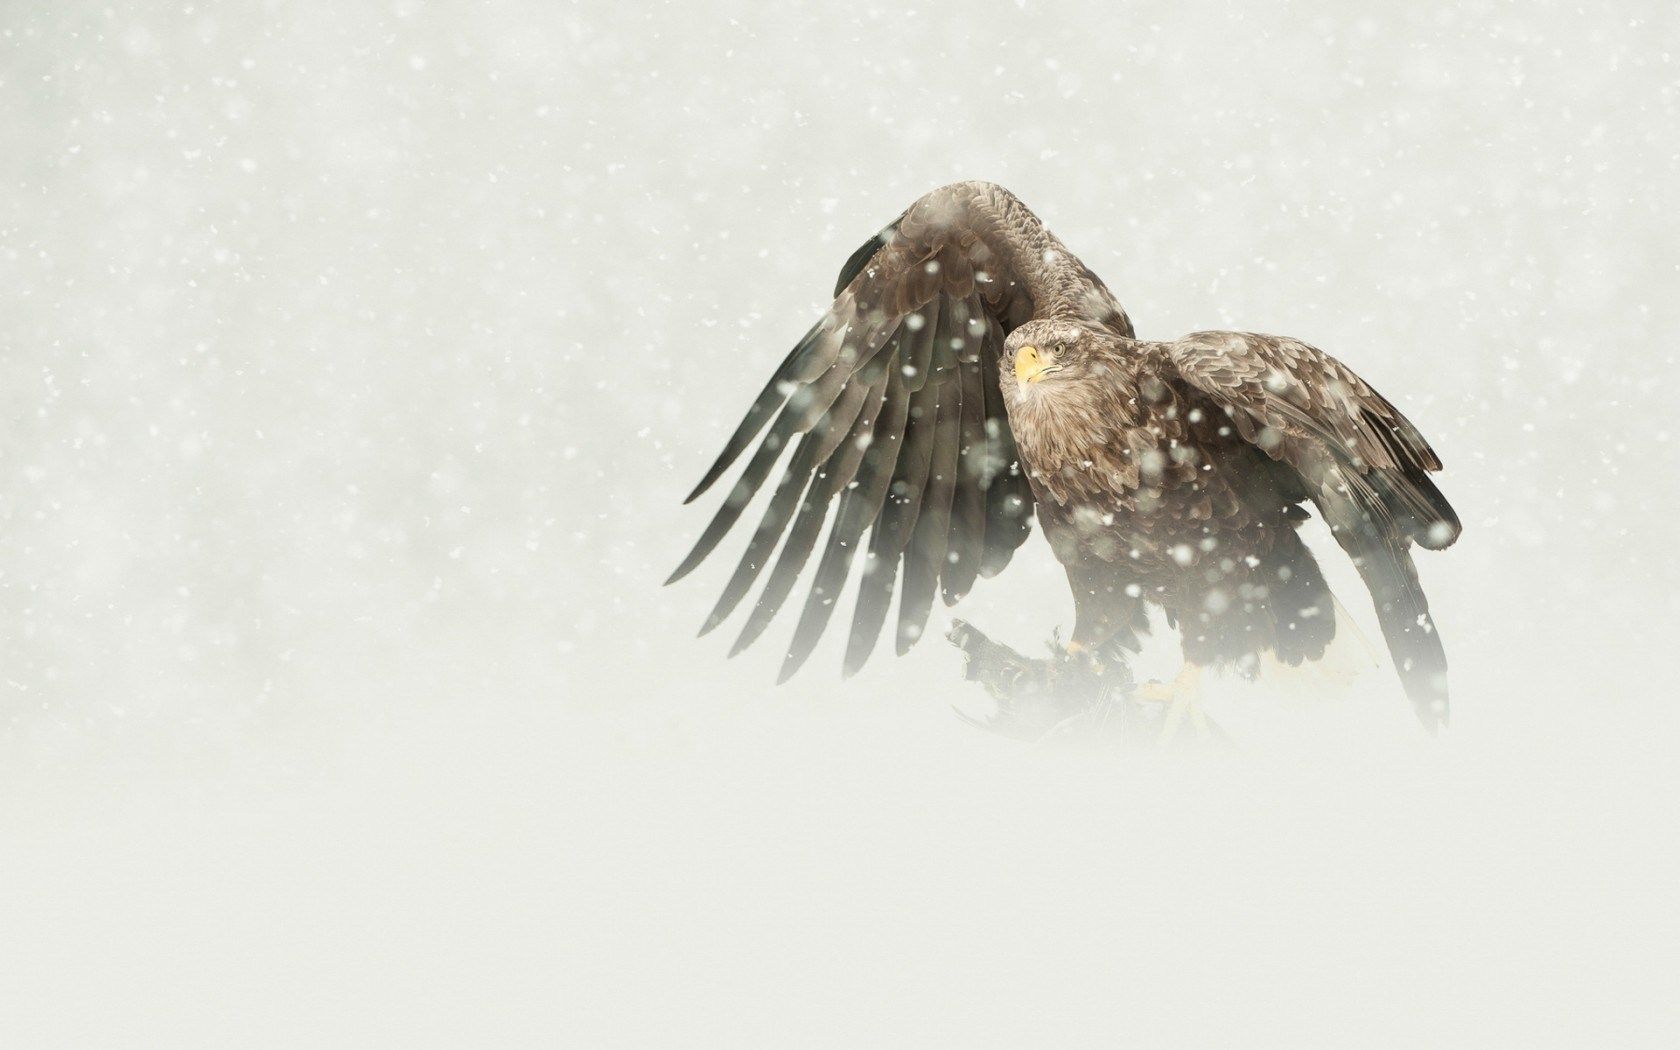 HD wallpaper, Winter, Bird, Snowfall, Eagle, Snowflakes